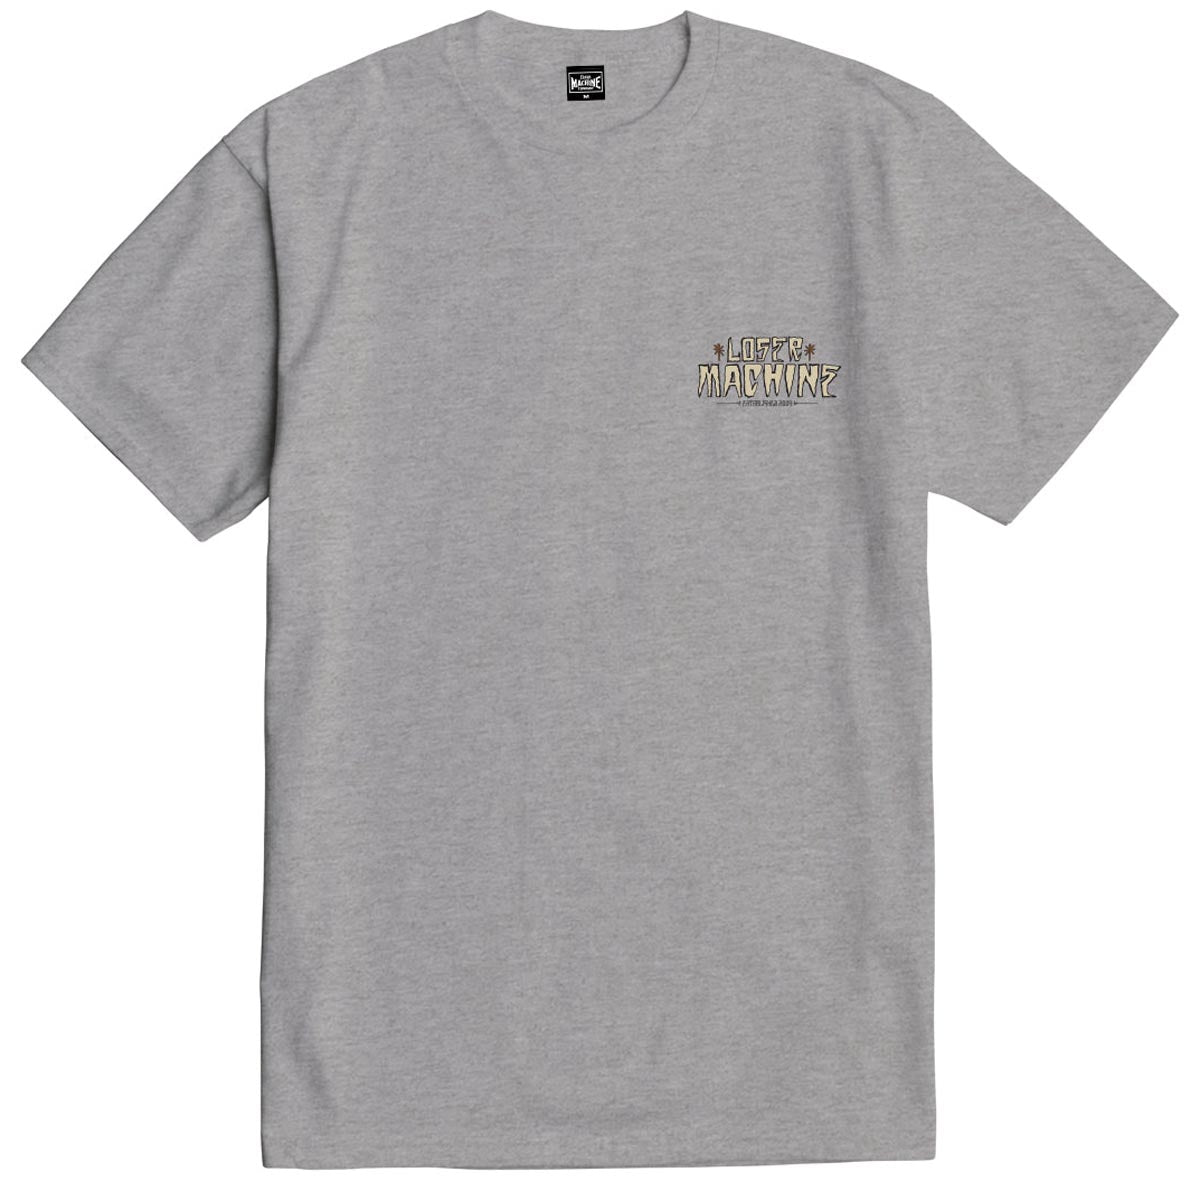 Loser Machine Onslaught T-Shirt - Heather Grey image 2